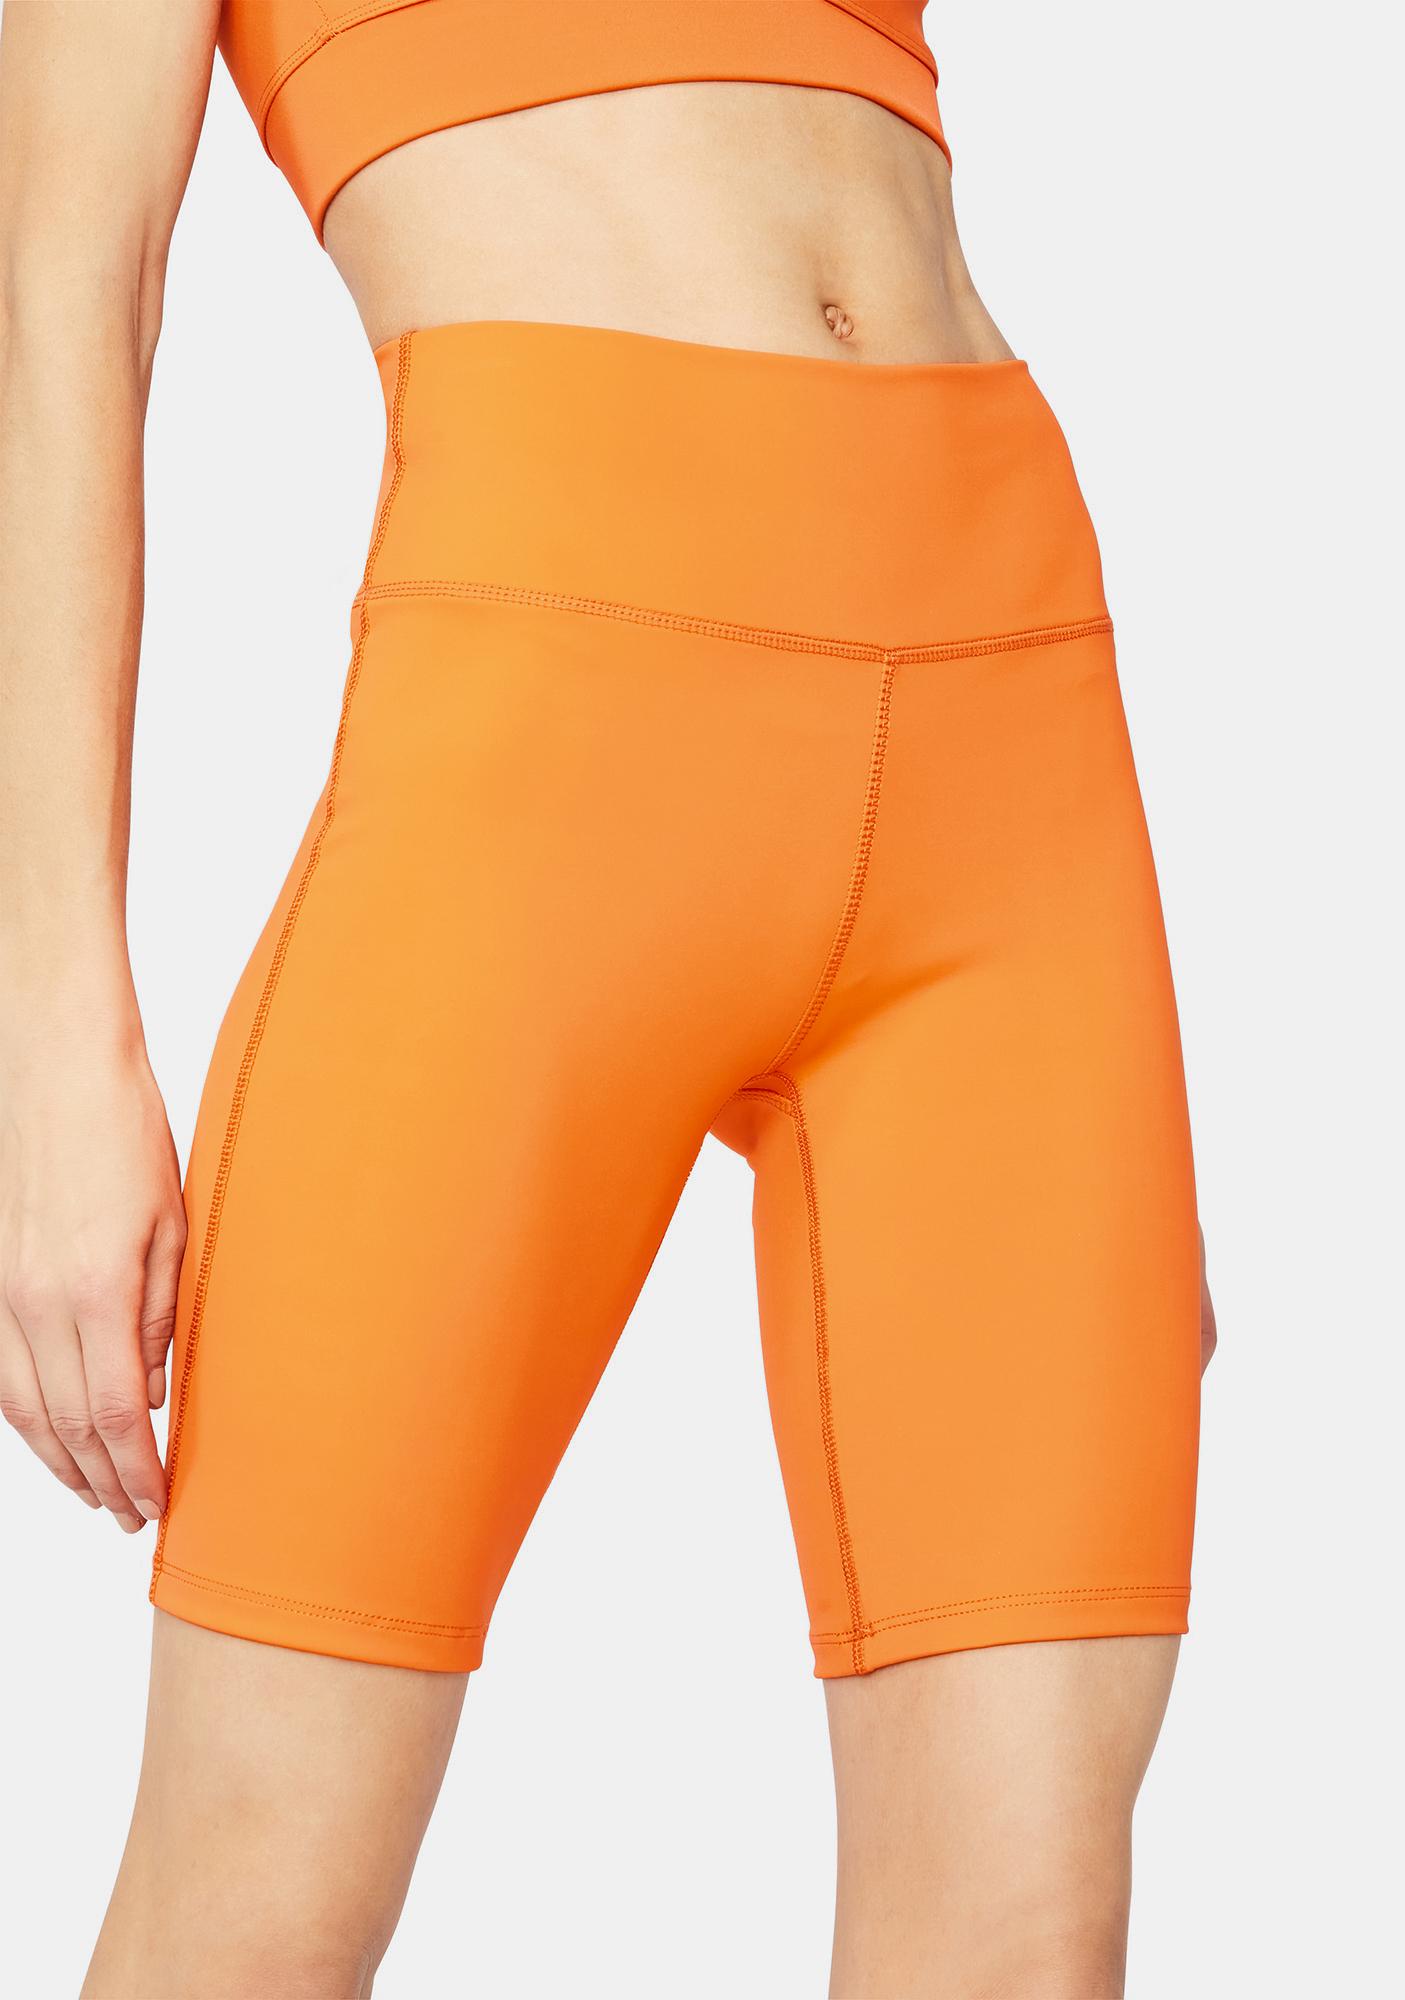 biker shorts orange